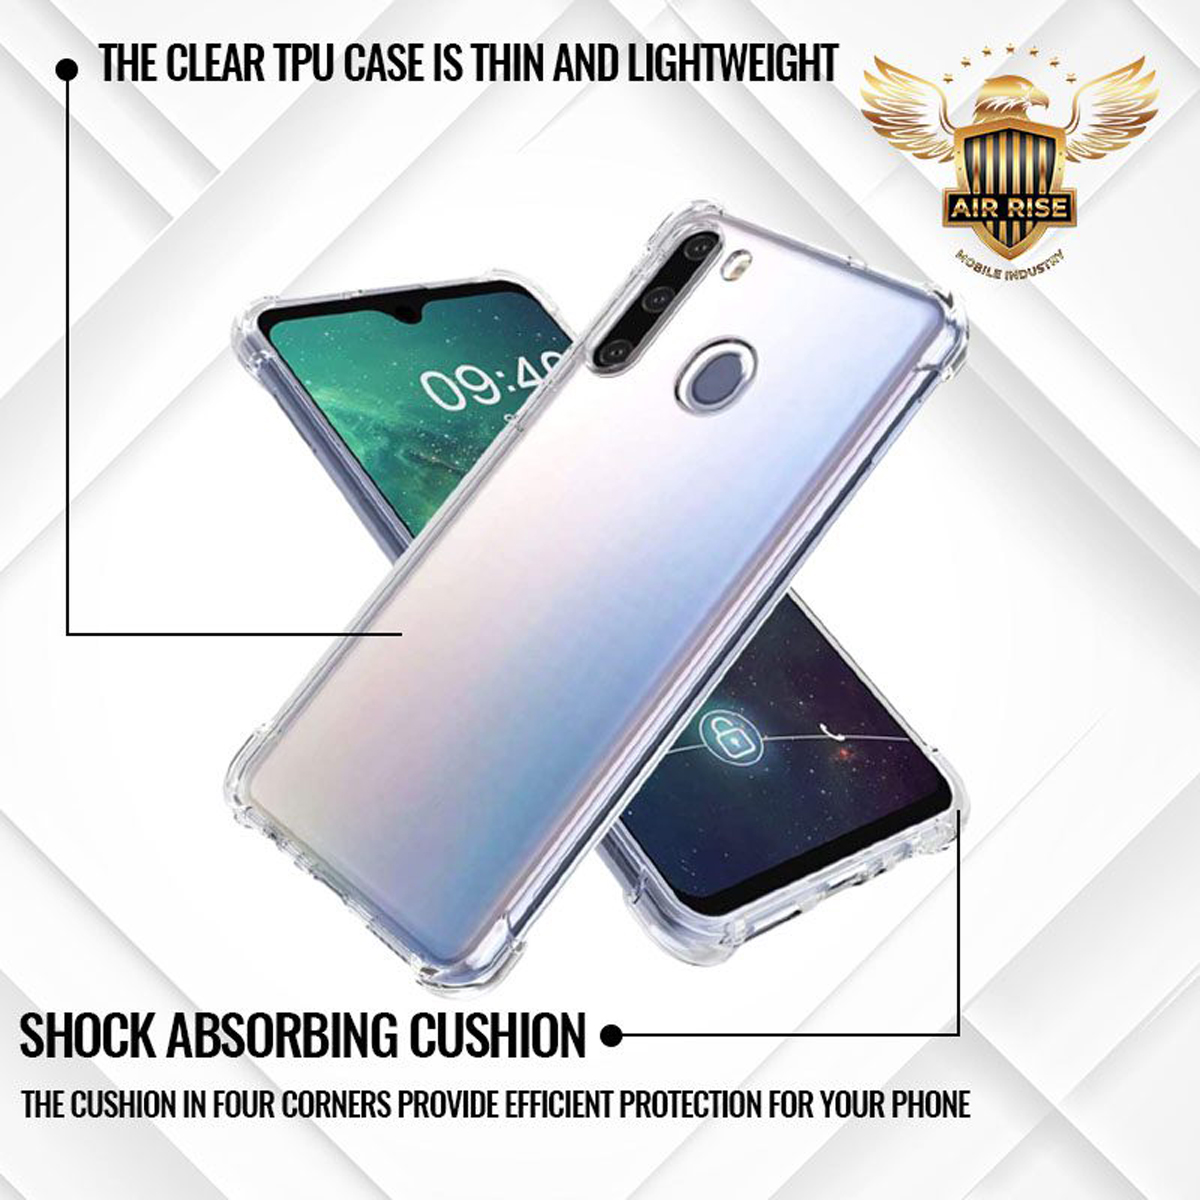 Samsung Galaxy Crystal Clear Bumper Case - image 2 of 2